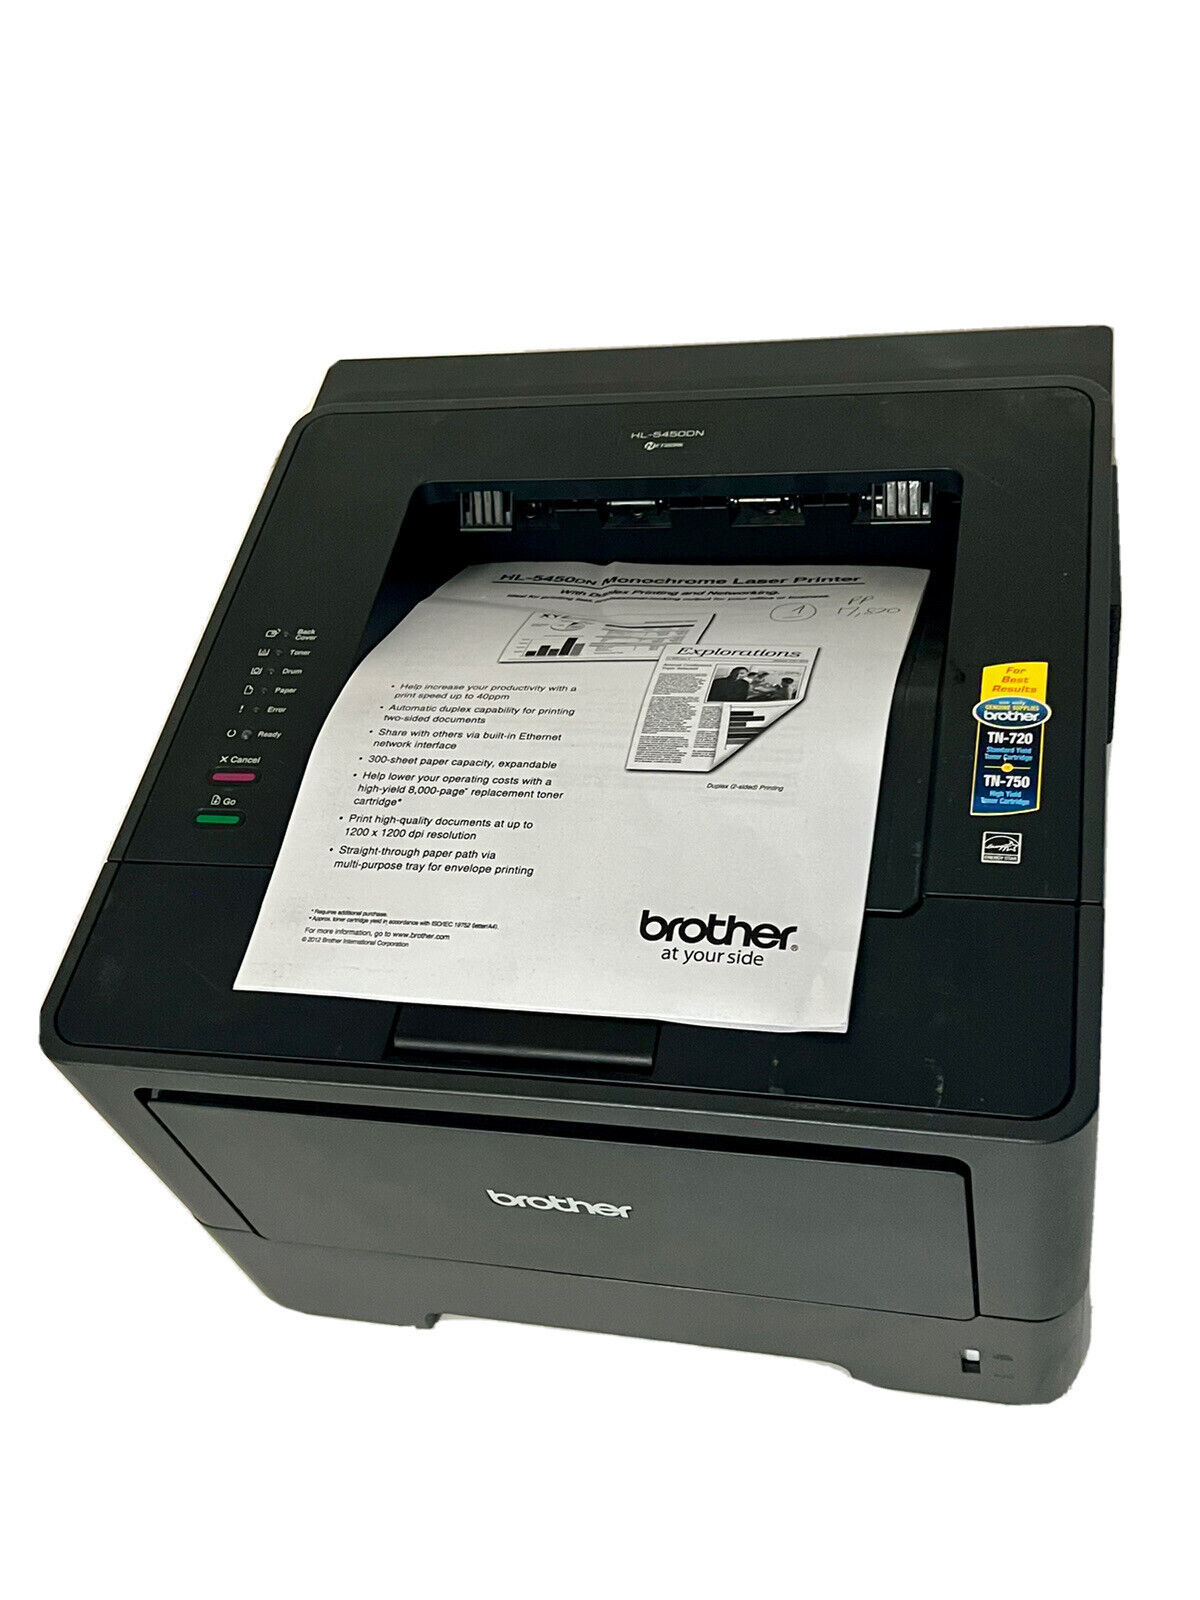 Brother HL-5450DN Monochrome Laser Printer w/Duplex, Network 3.25k Page V. GOOD - $146.05 - $200.82